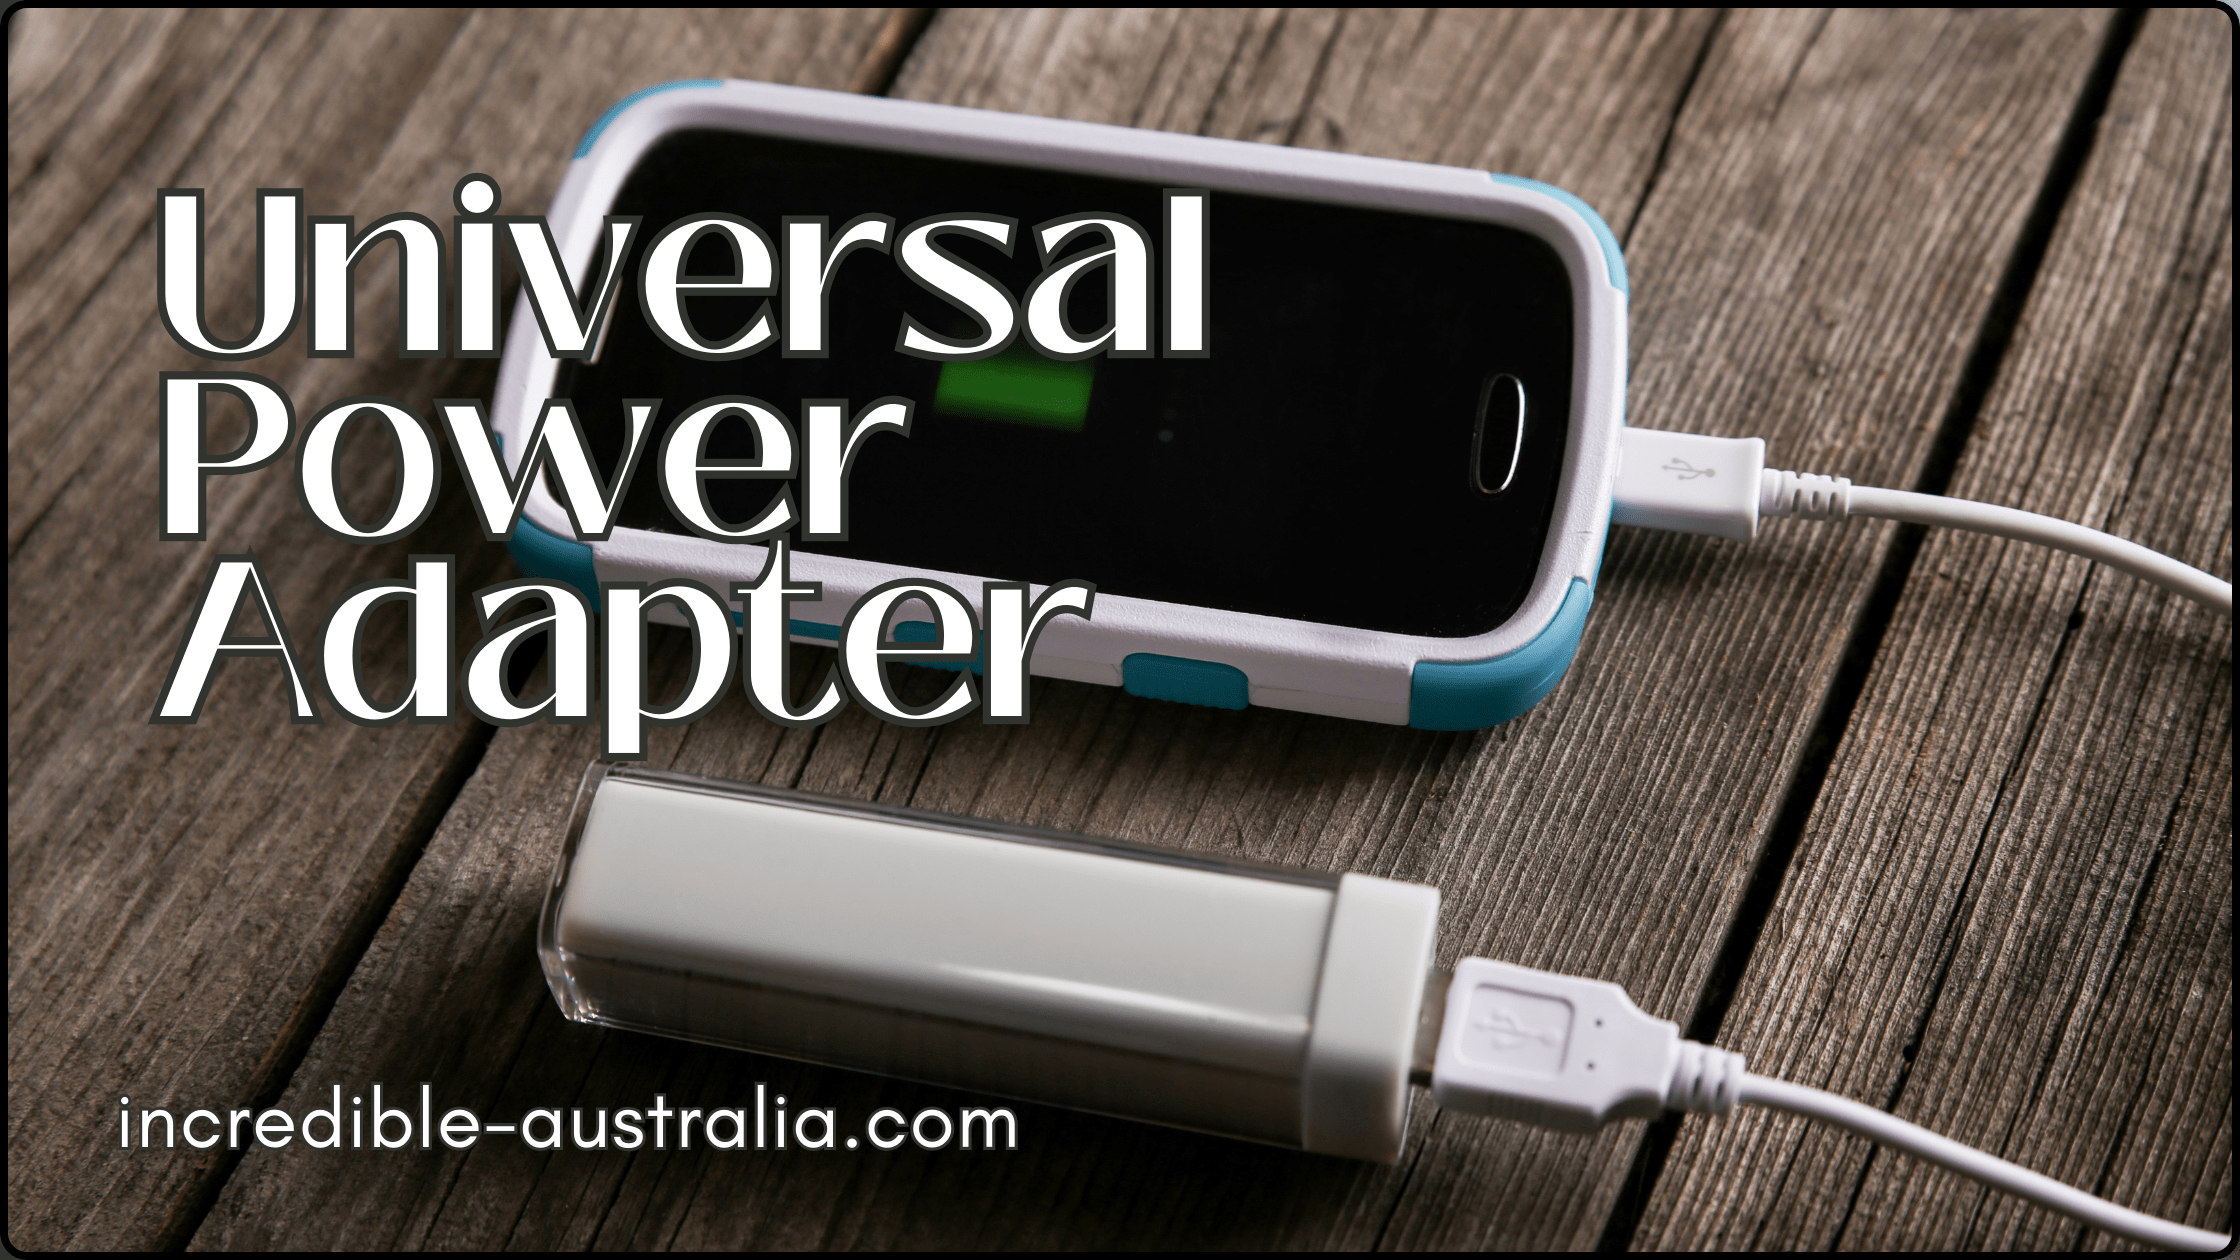 Universal Power Adapter